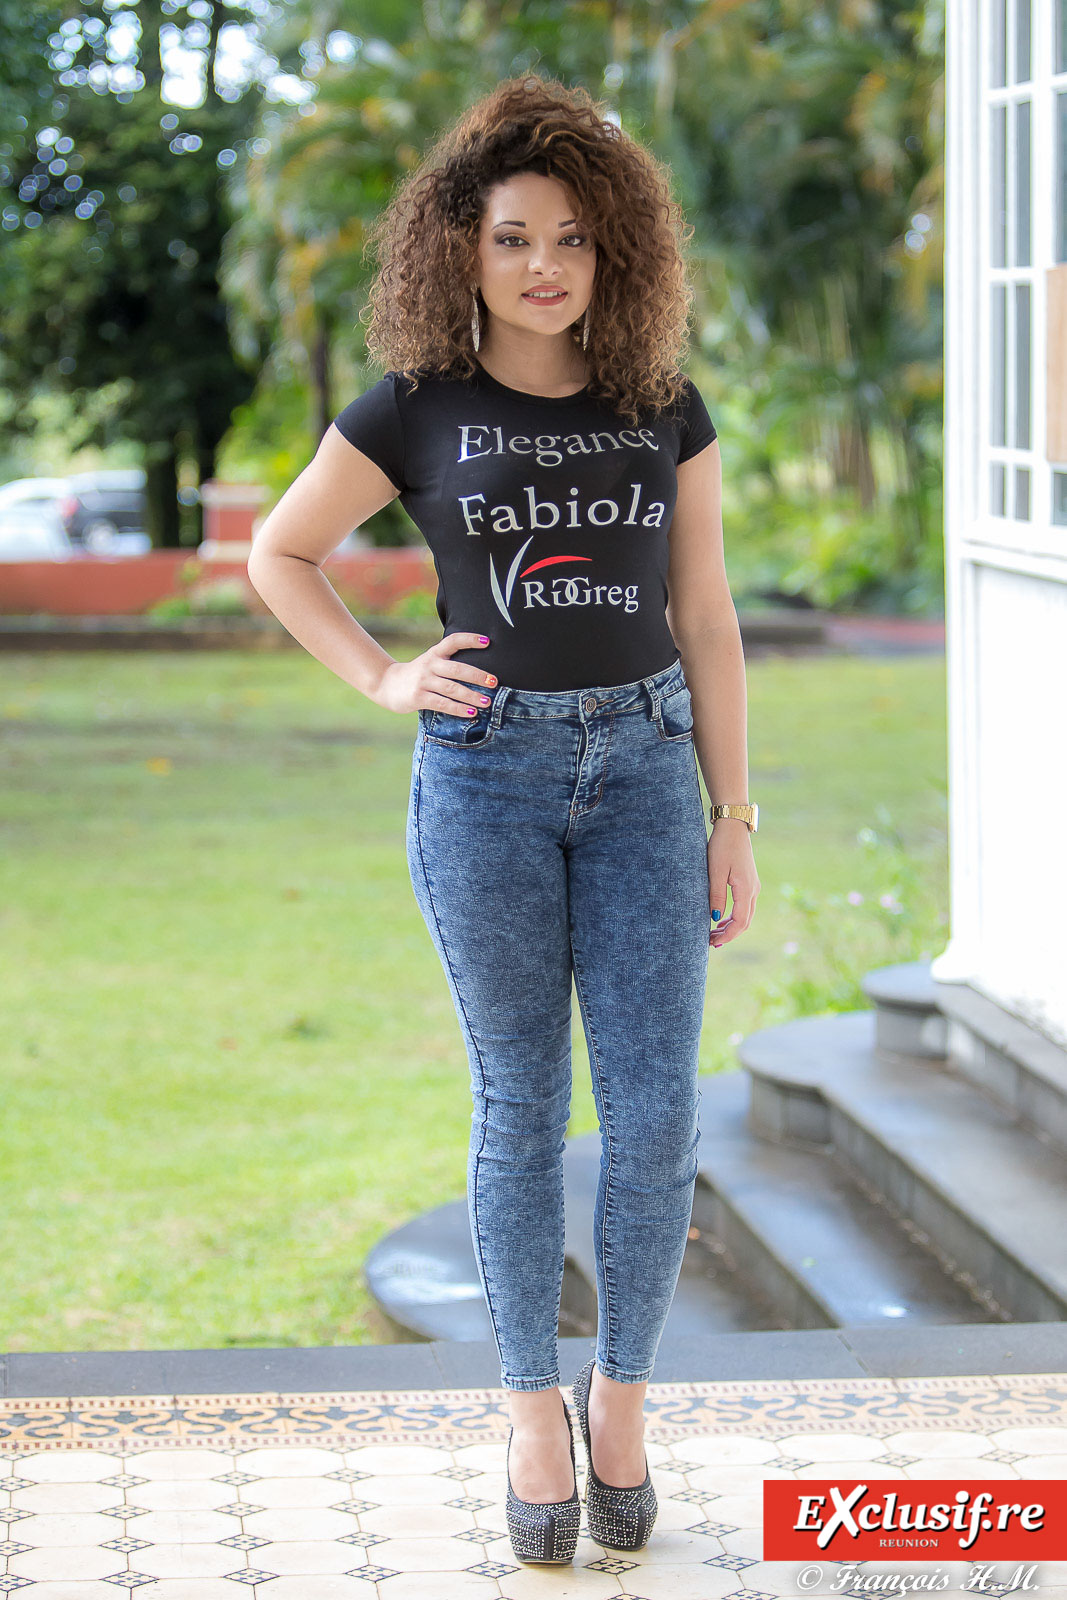 N°1: Fabiola Maranhao